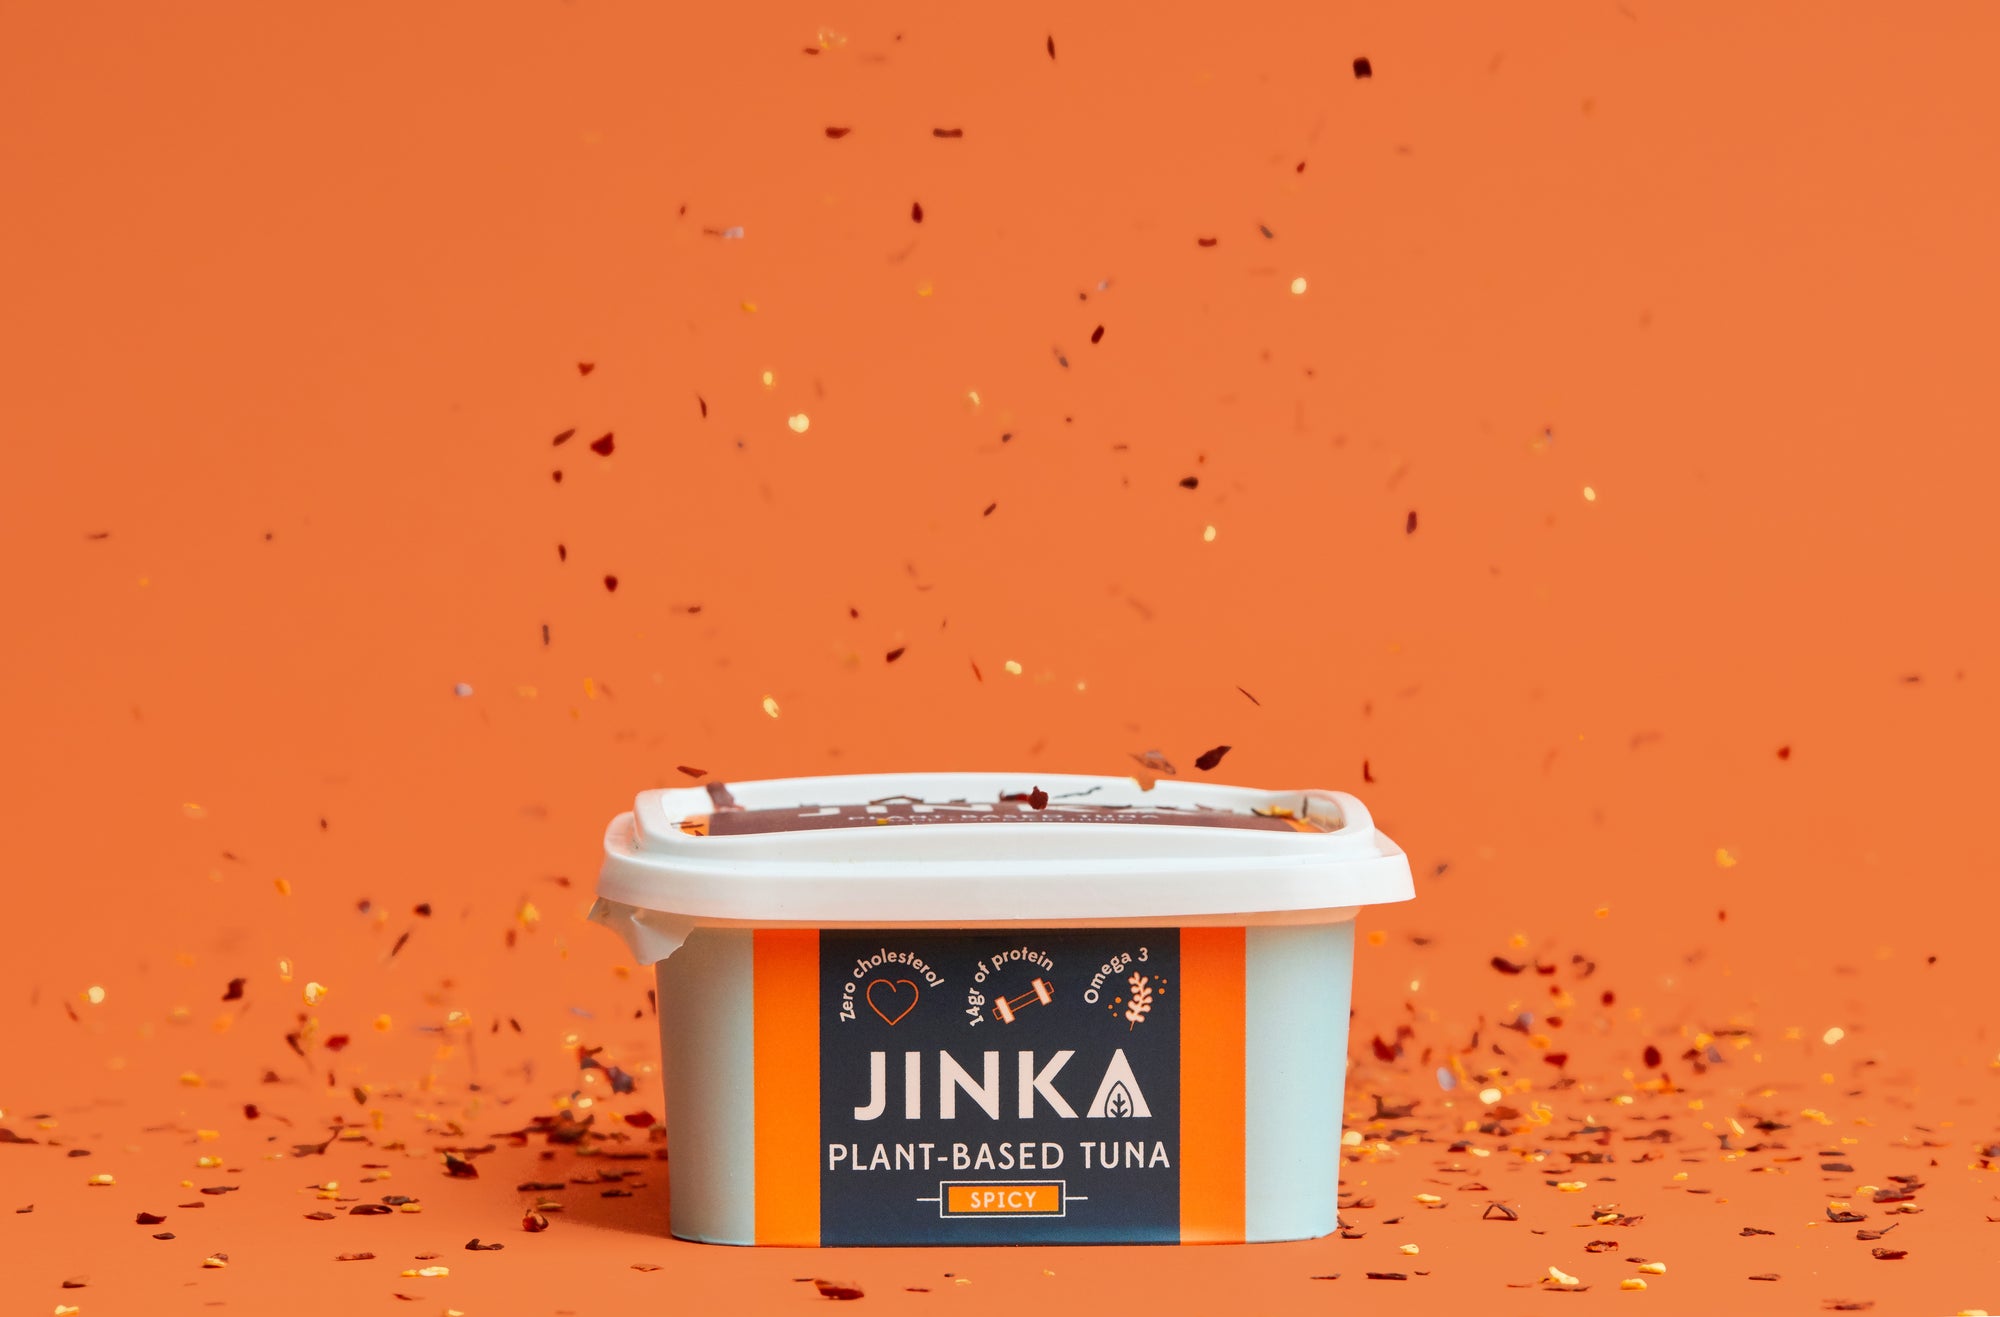 Spicy Jinka, Plant-Based Tuna